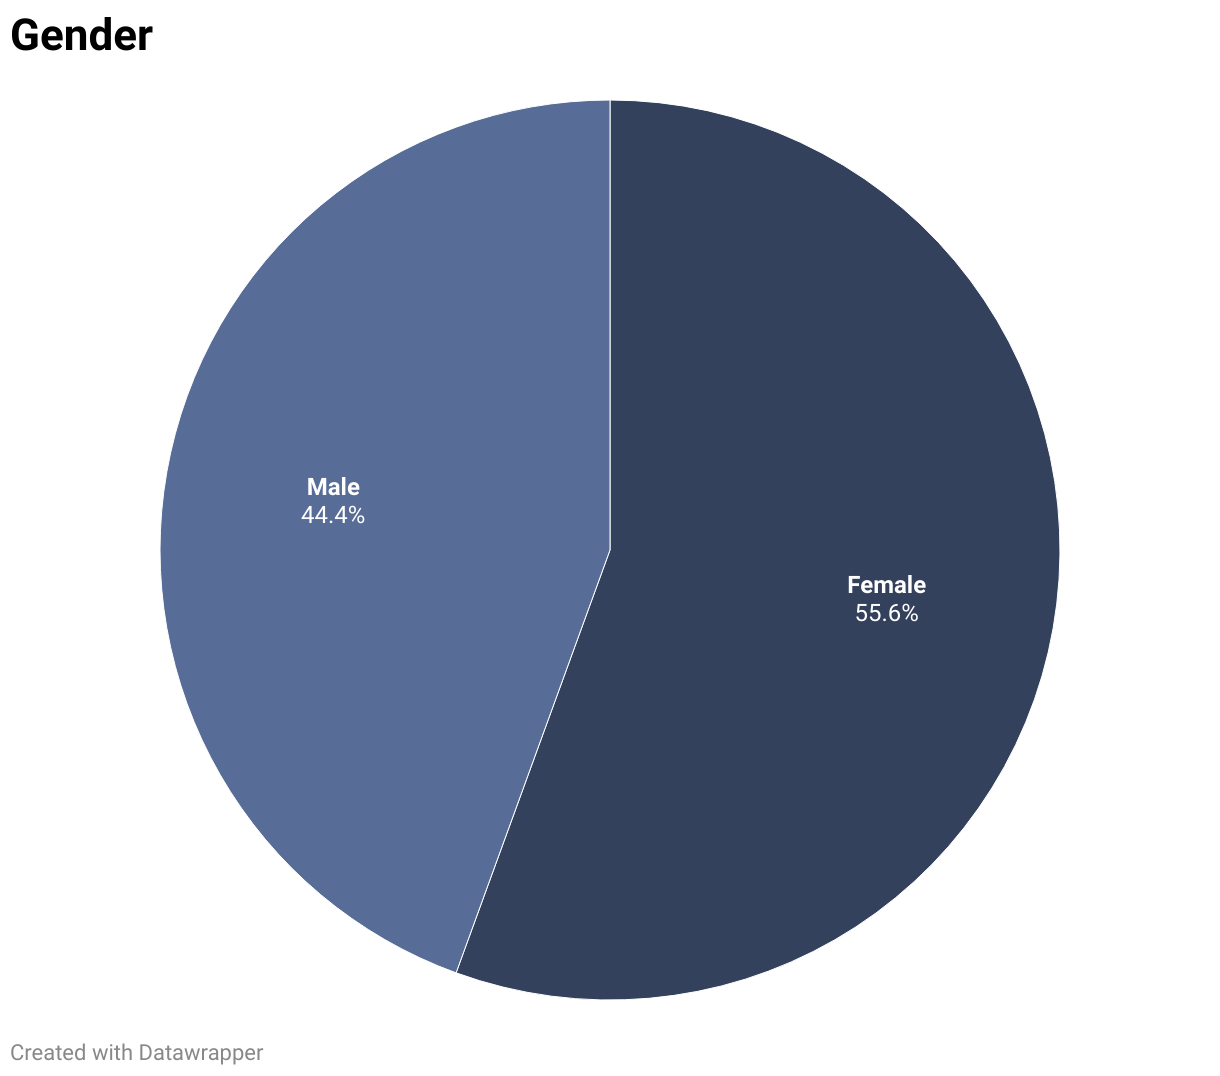 44.4% male, 55.6% female